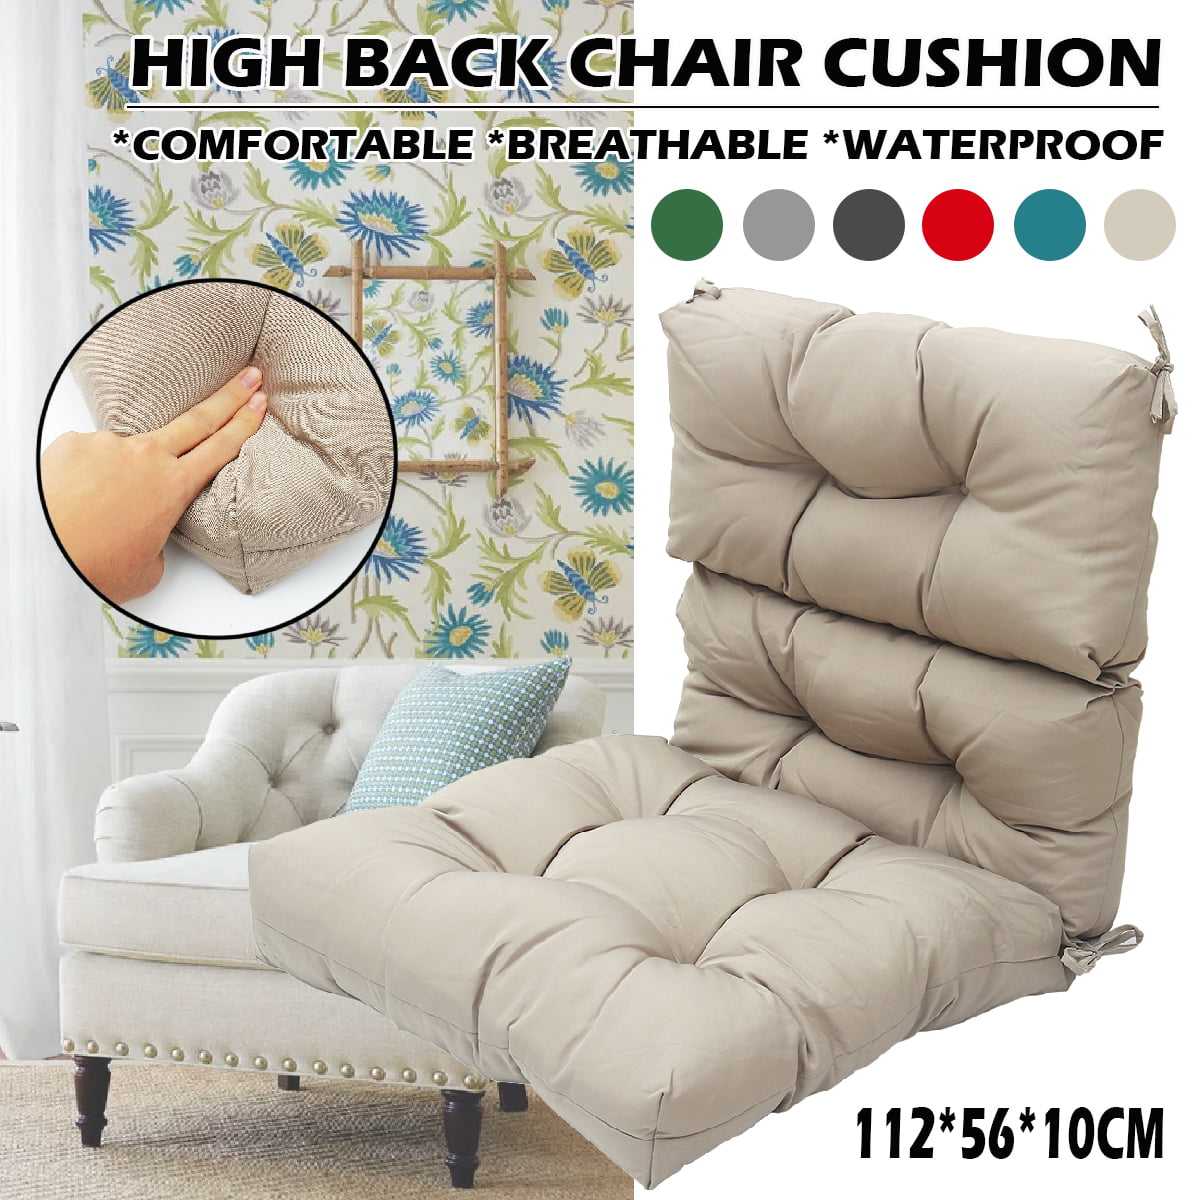 High Back Rocking Chair Cushion, Adjustable Car Back Cushion, Indoor